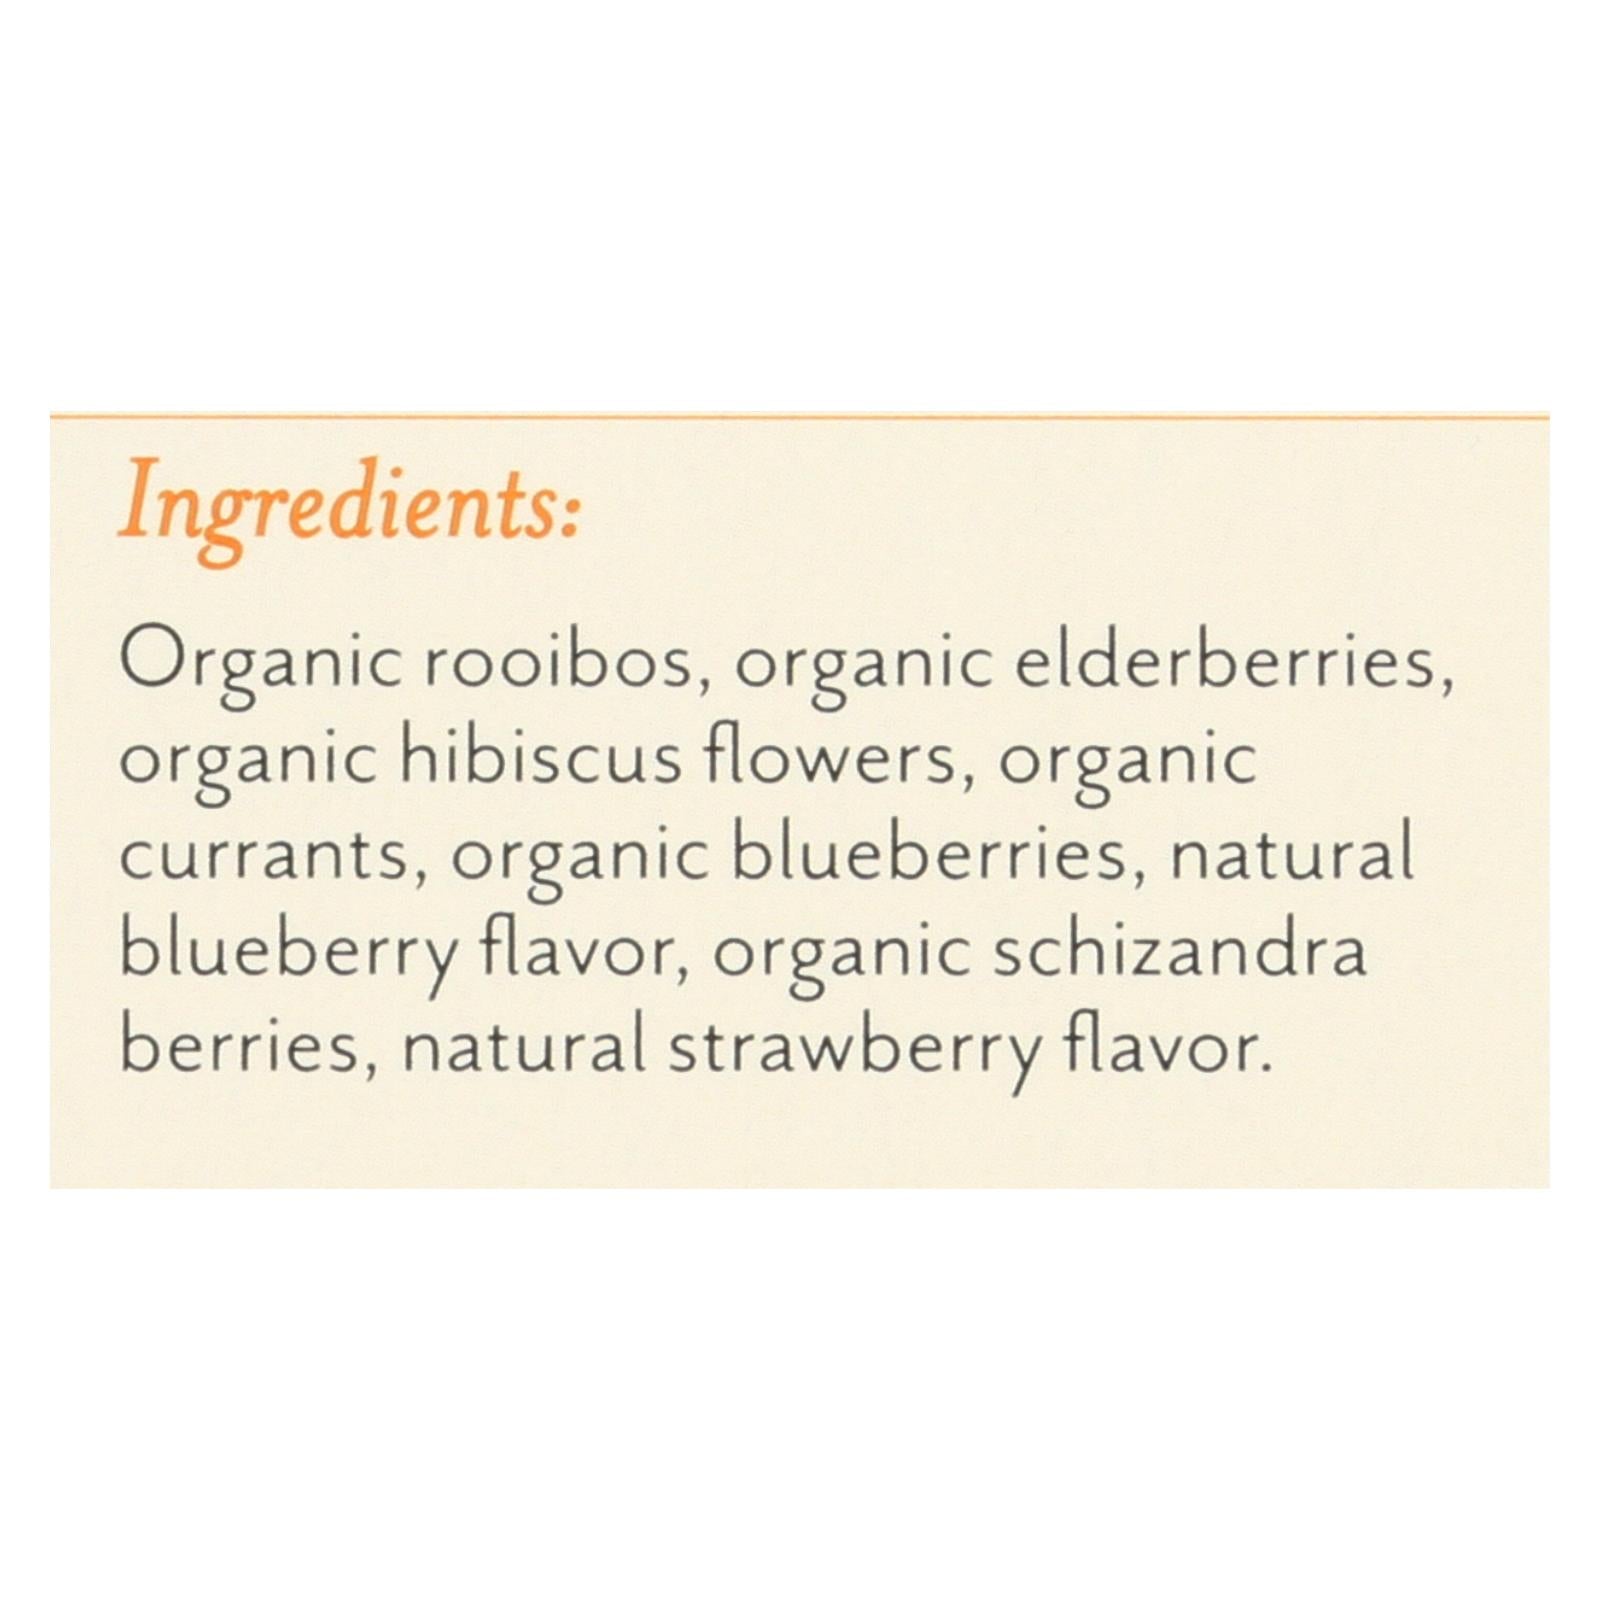 Rishi Organic Tea - Blueberry Hibiscus - Case Of 6 - 15 Bags